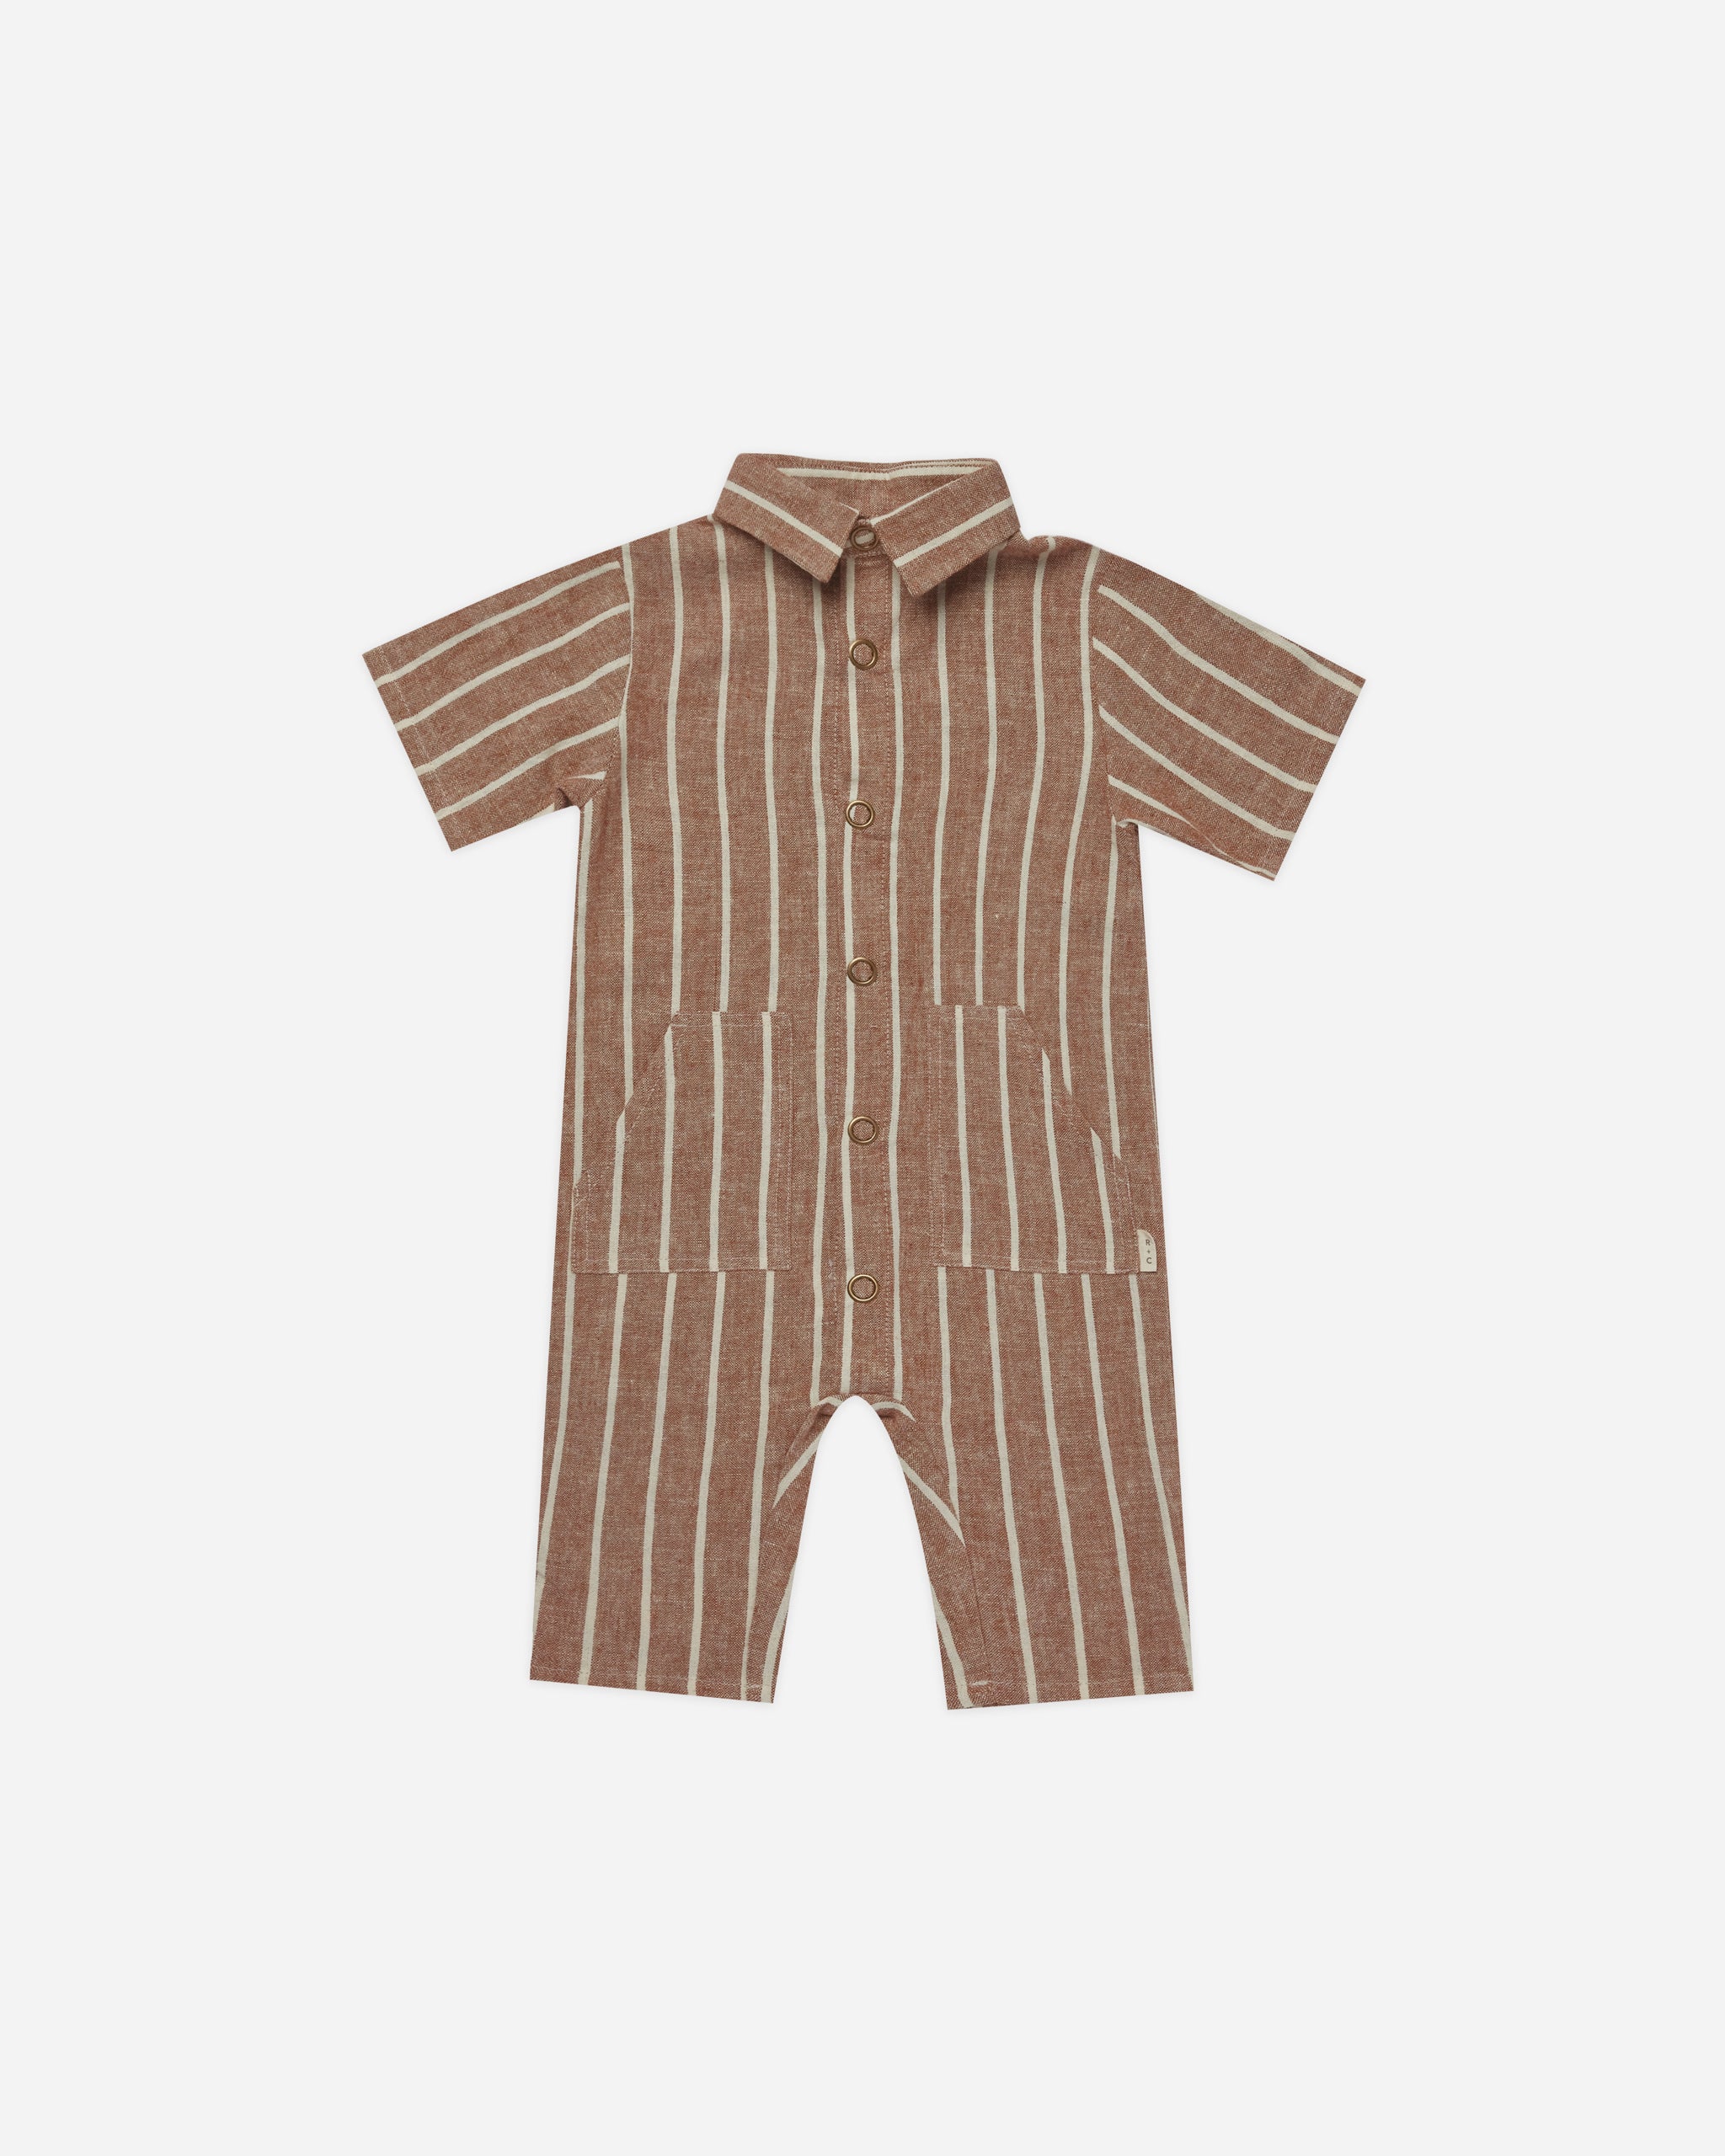 Rhett Jumpsuit || Cedar Pinstripe - Rylee + Cru | Kids Clothes | Trendy Baby Clothes | Modern Infant Outfits |